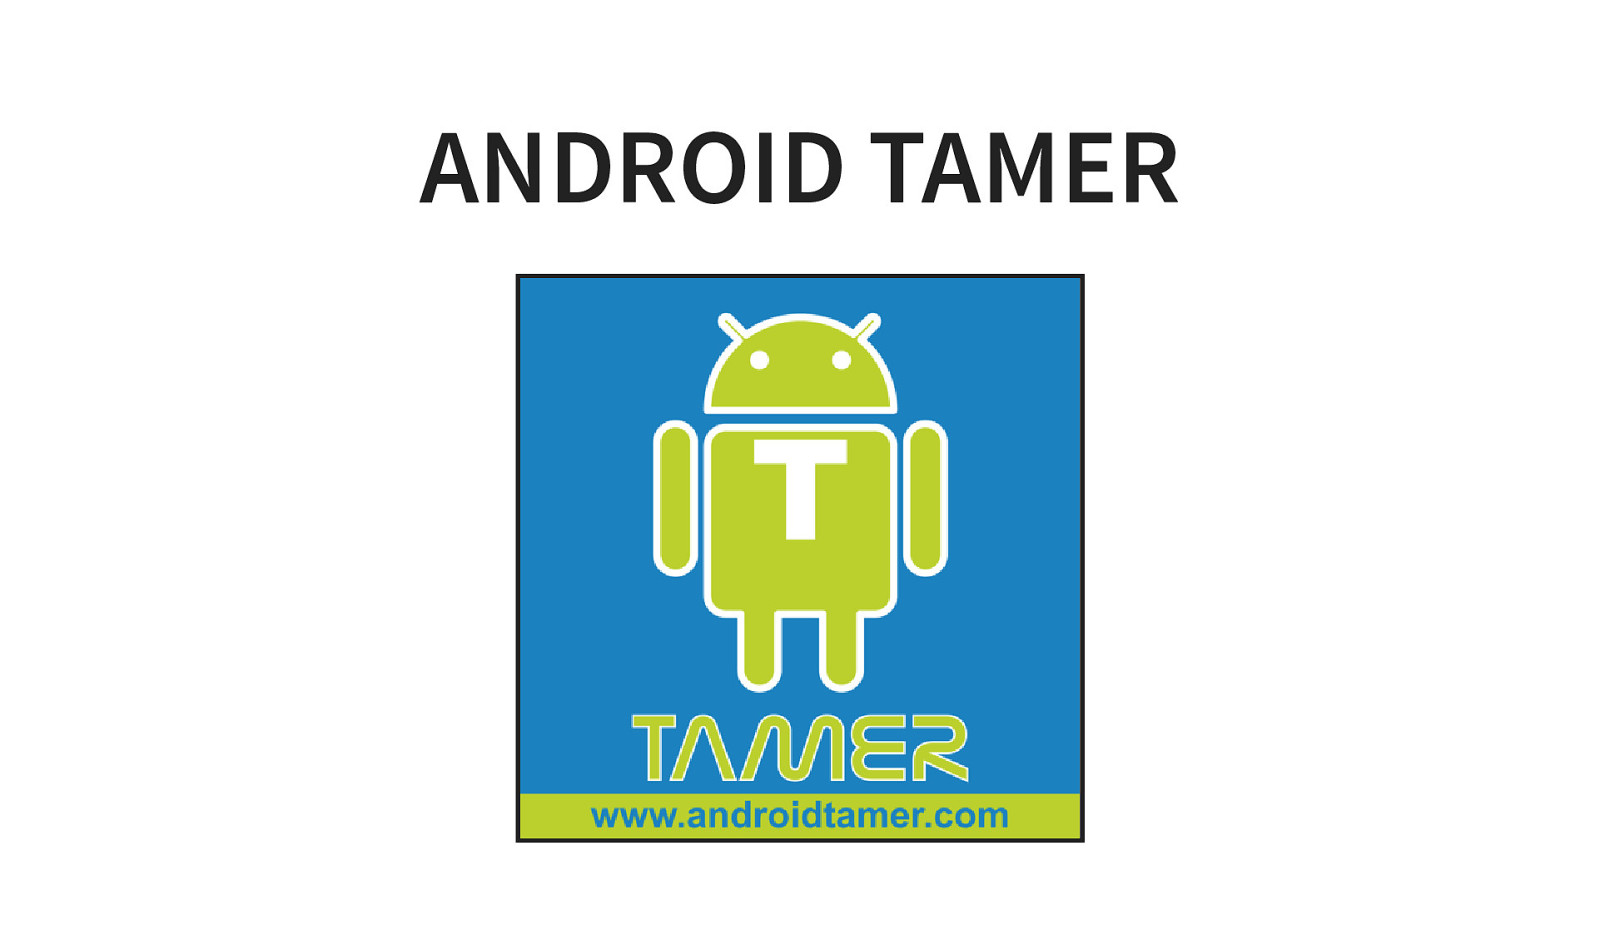 Android Tamer BH USA 2016 : Arsenal Presentation